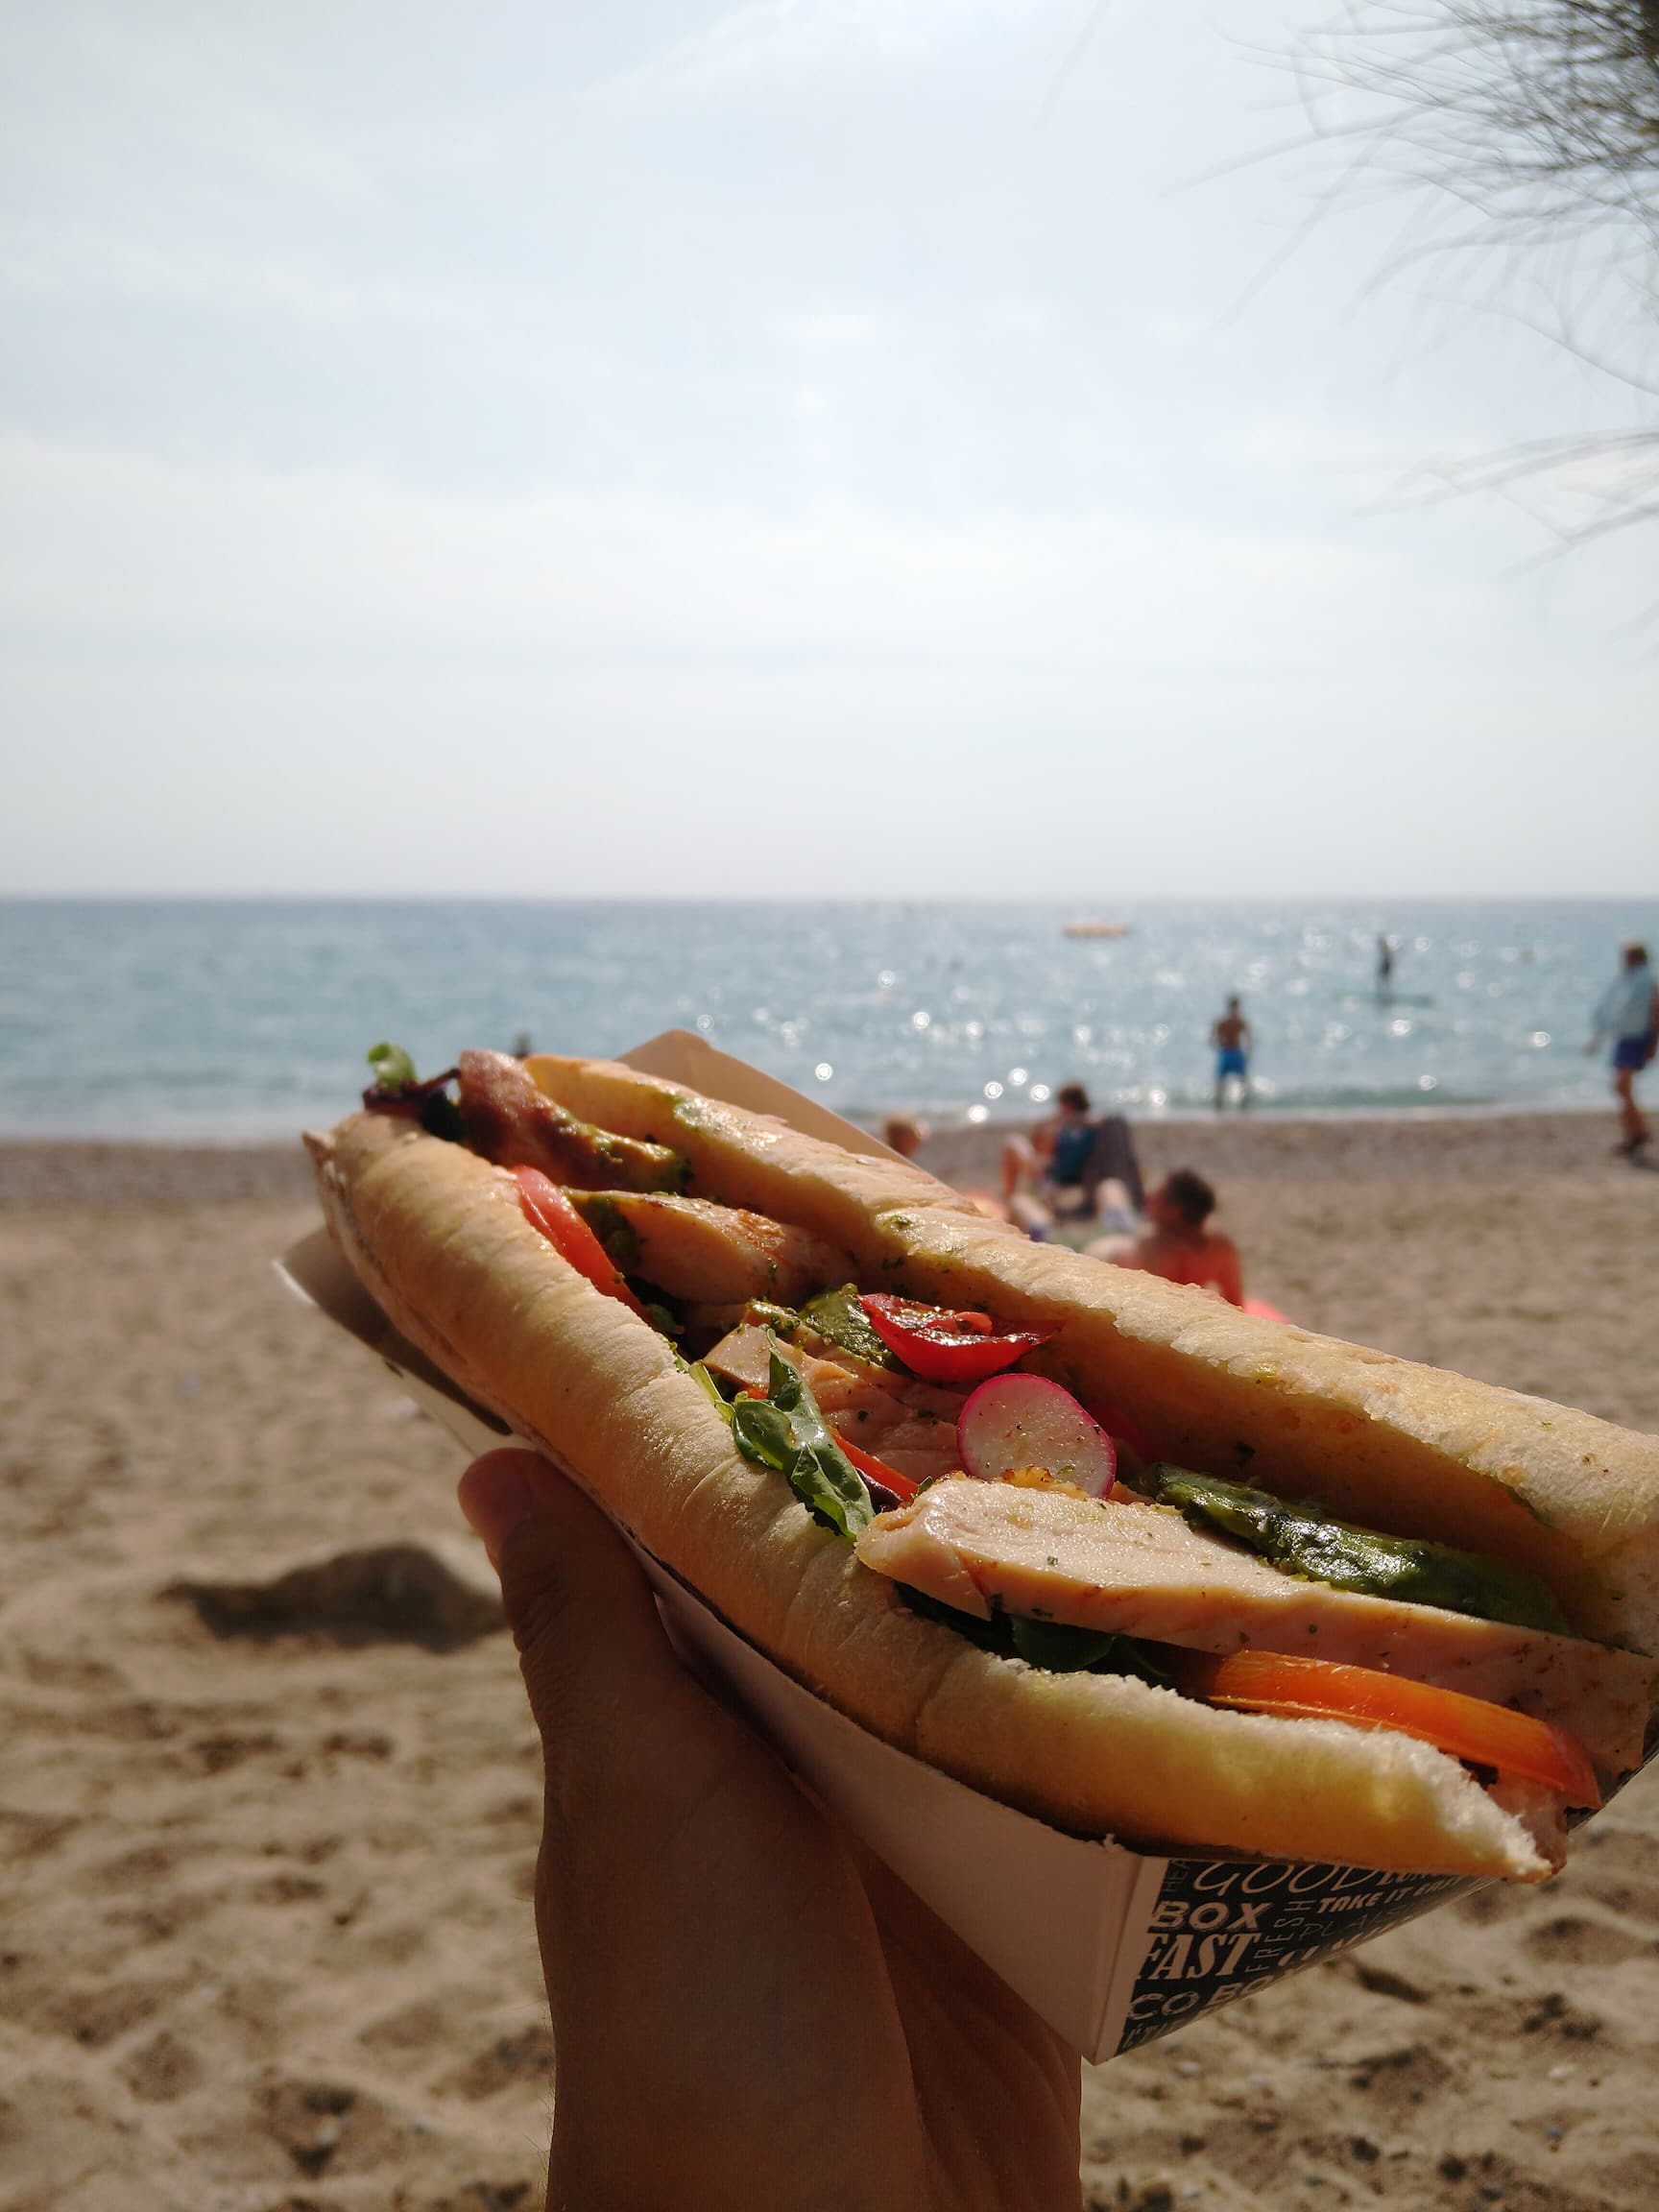 Glorious sandwich at the beach